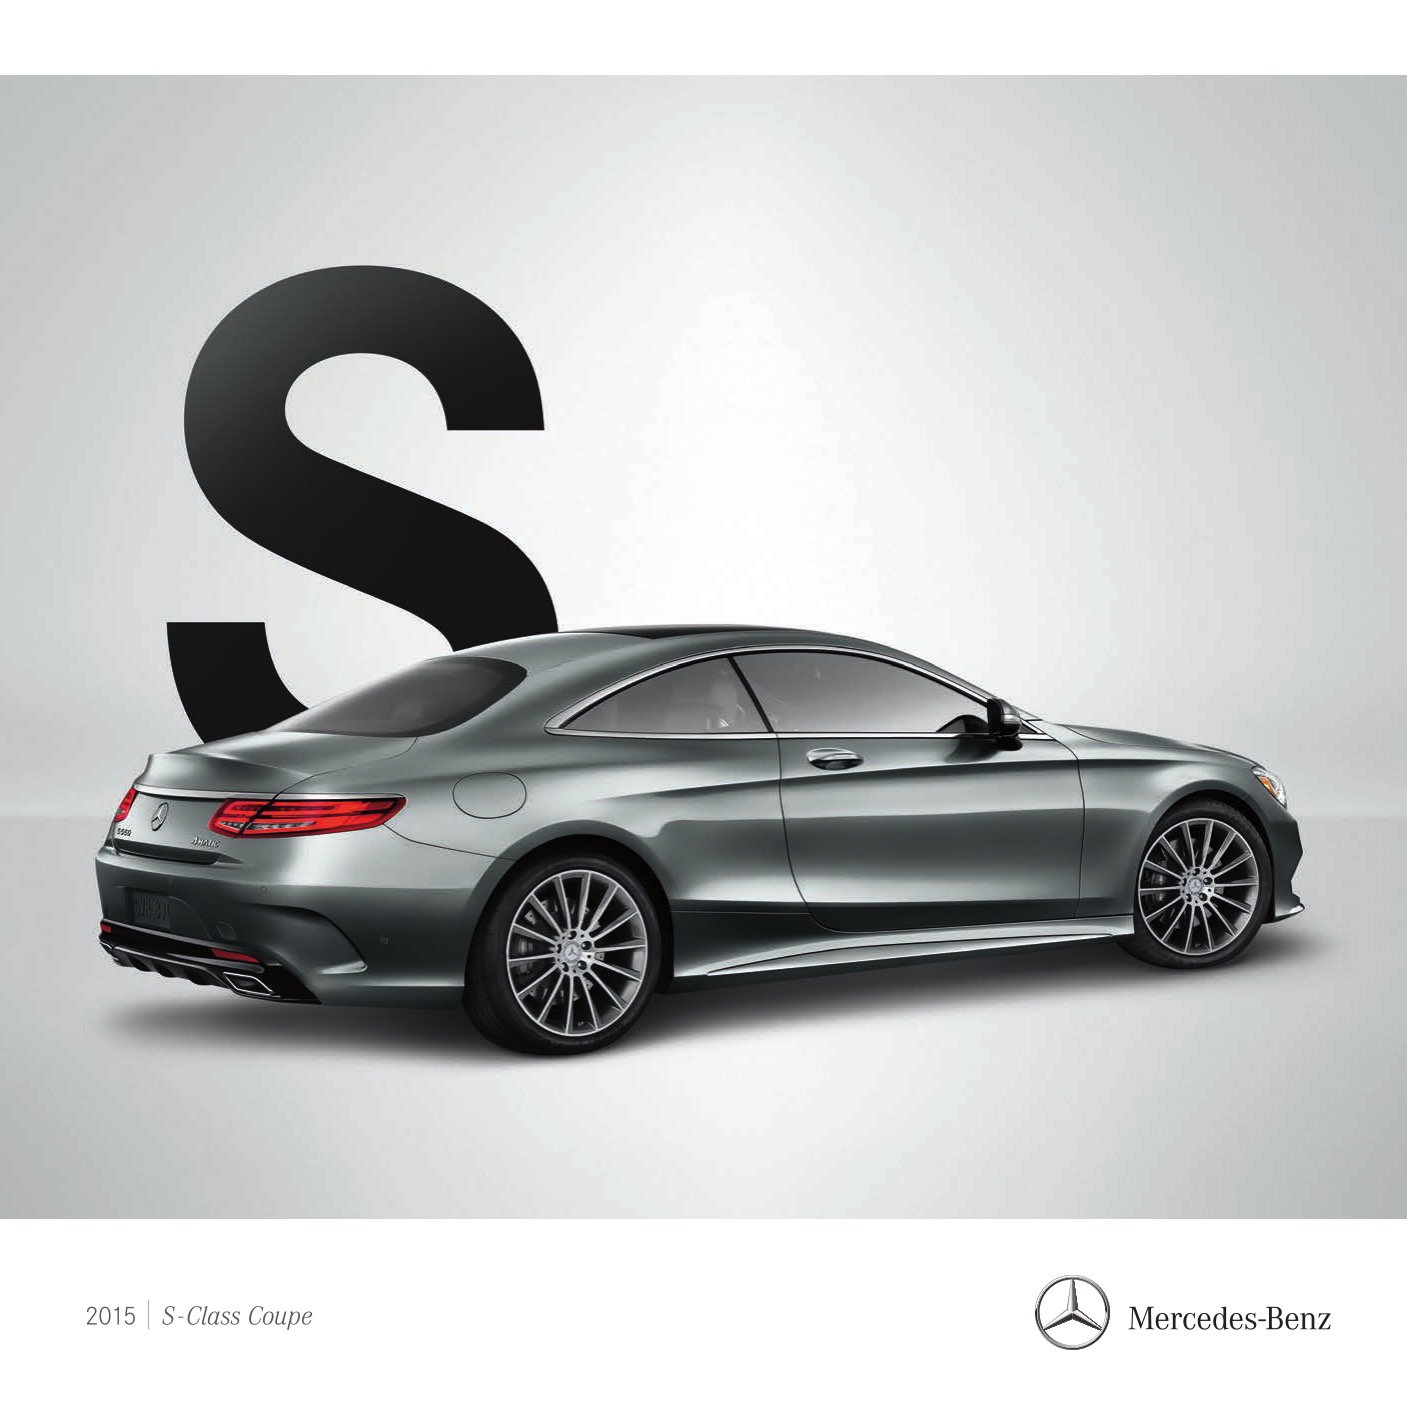 2015 Mercedes-Benz S-Class Coupe Brochure